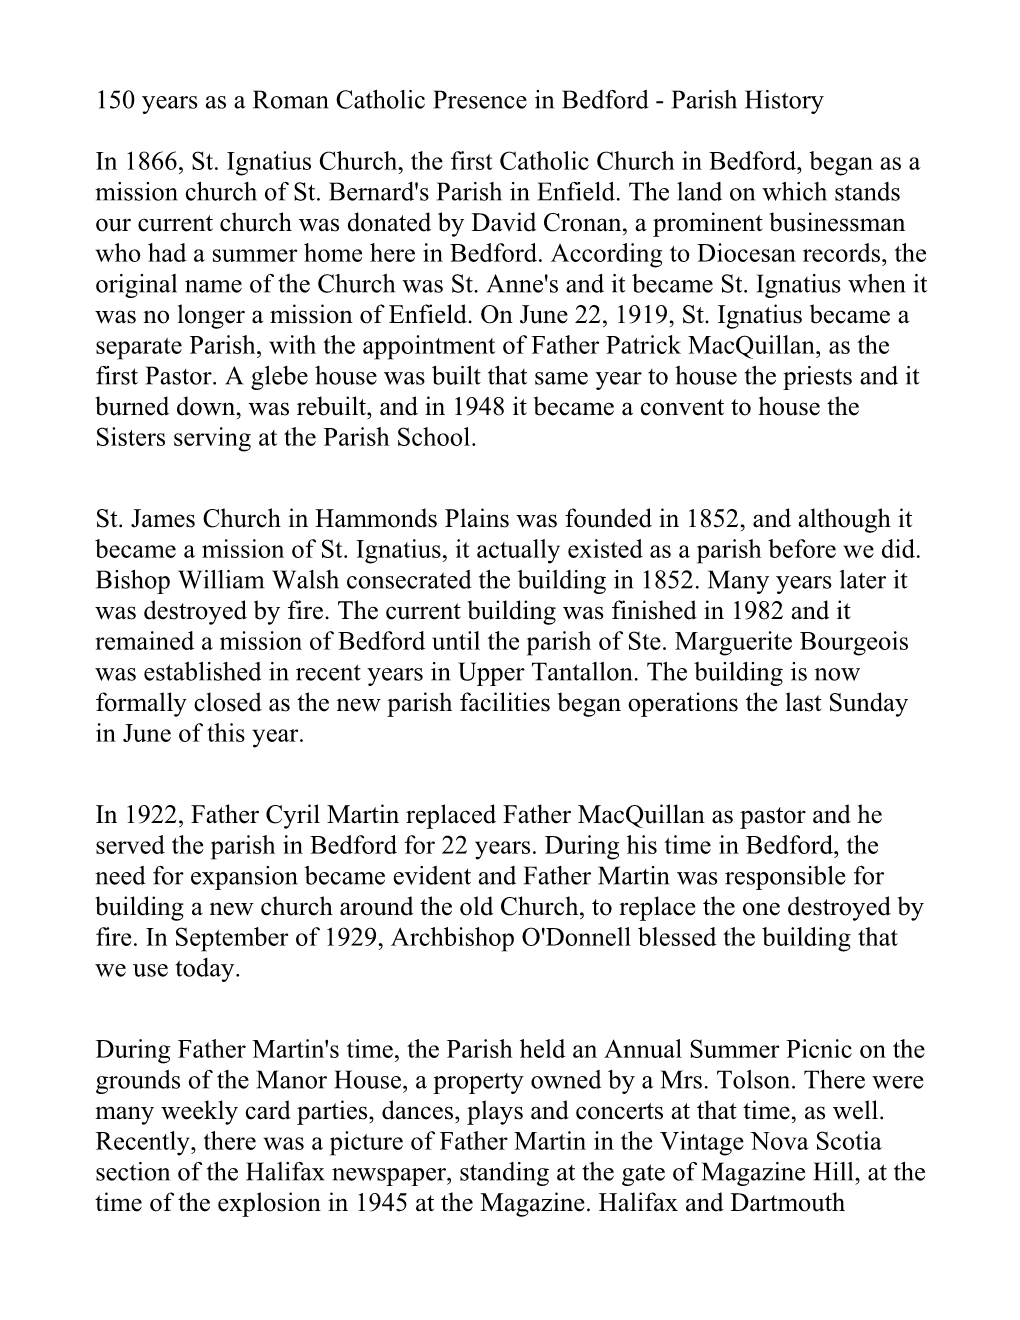 150 Years As a Roman Catholic Presence in Bedford- Parish History